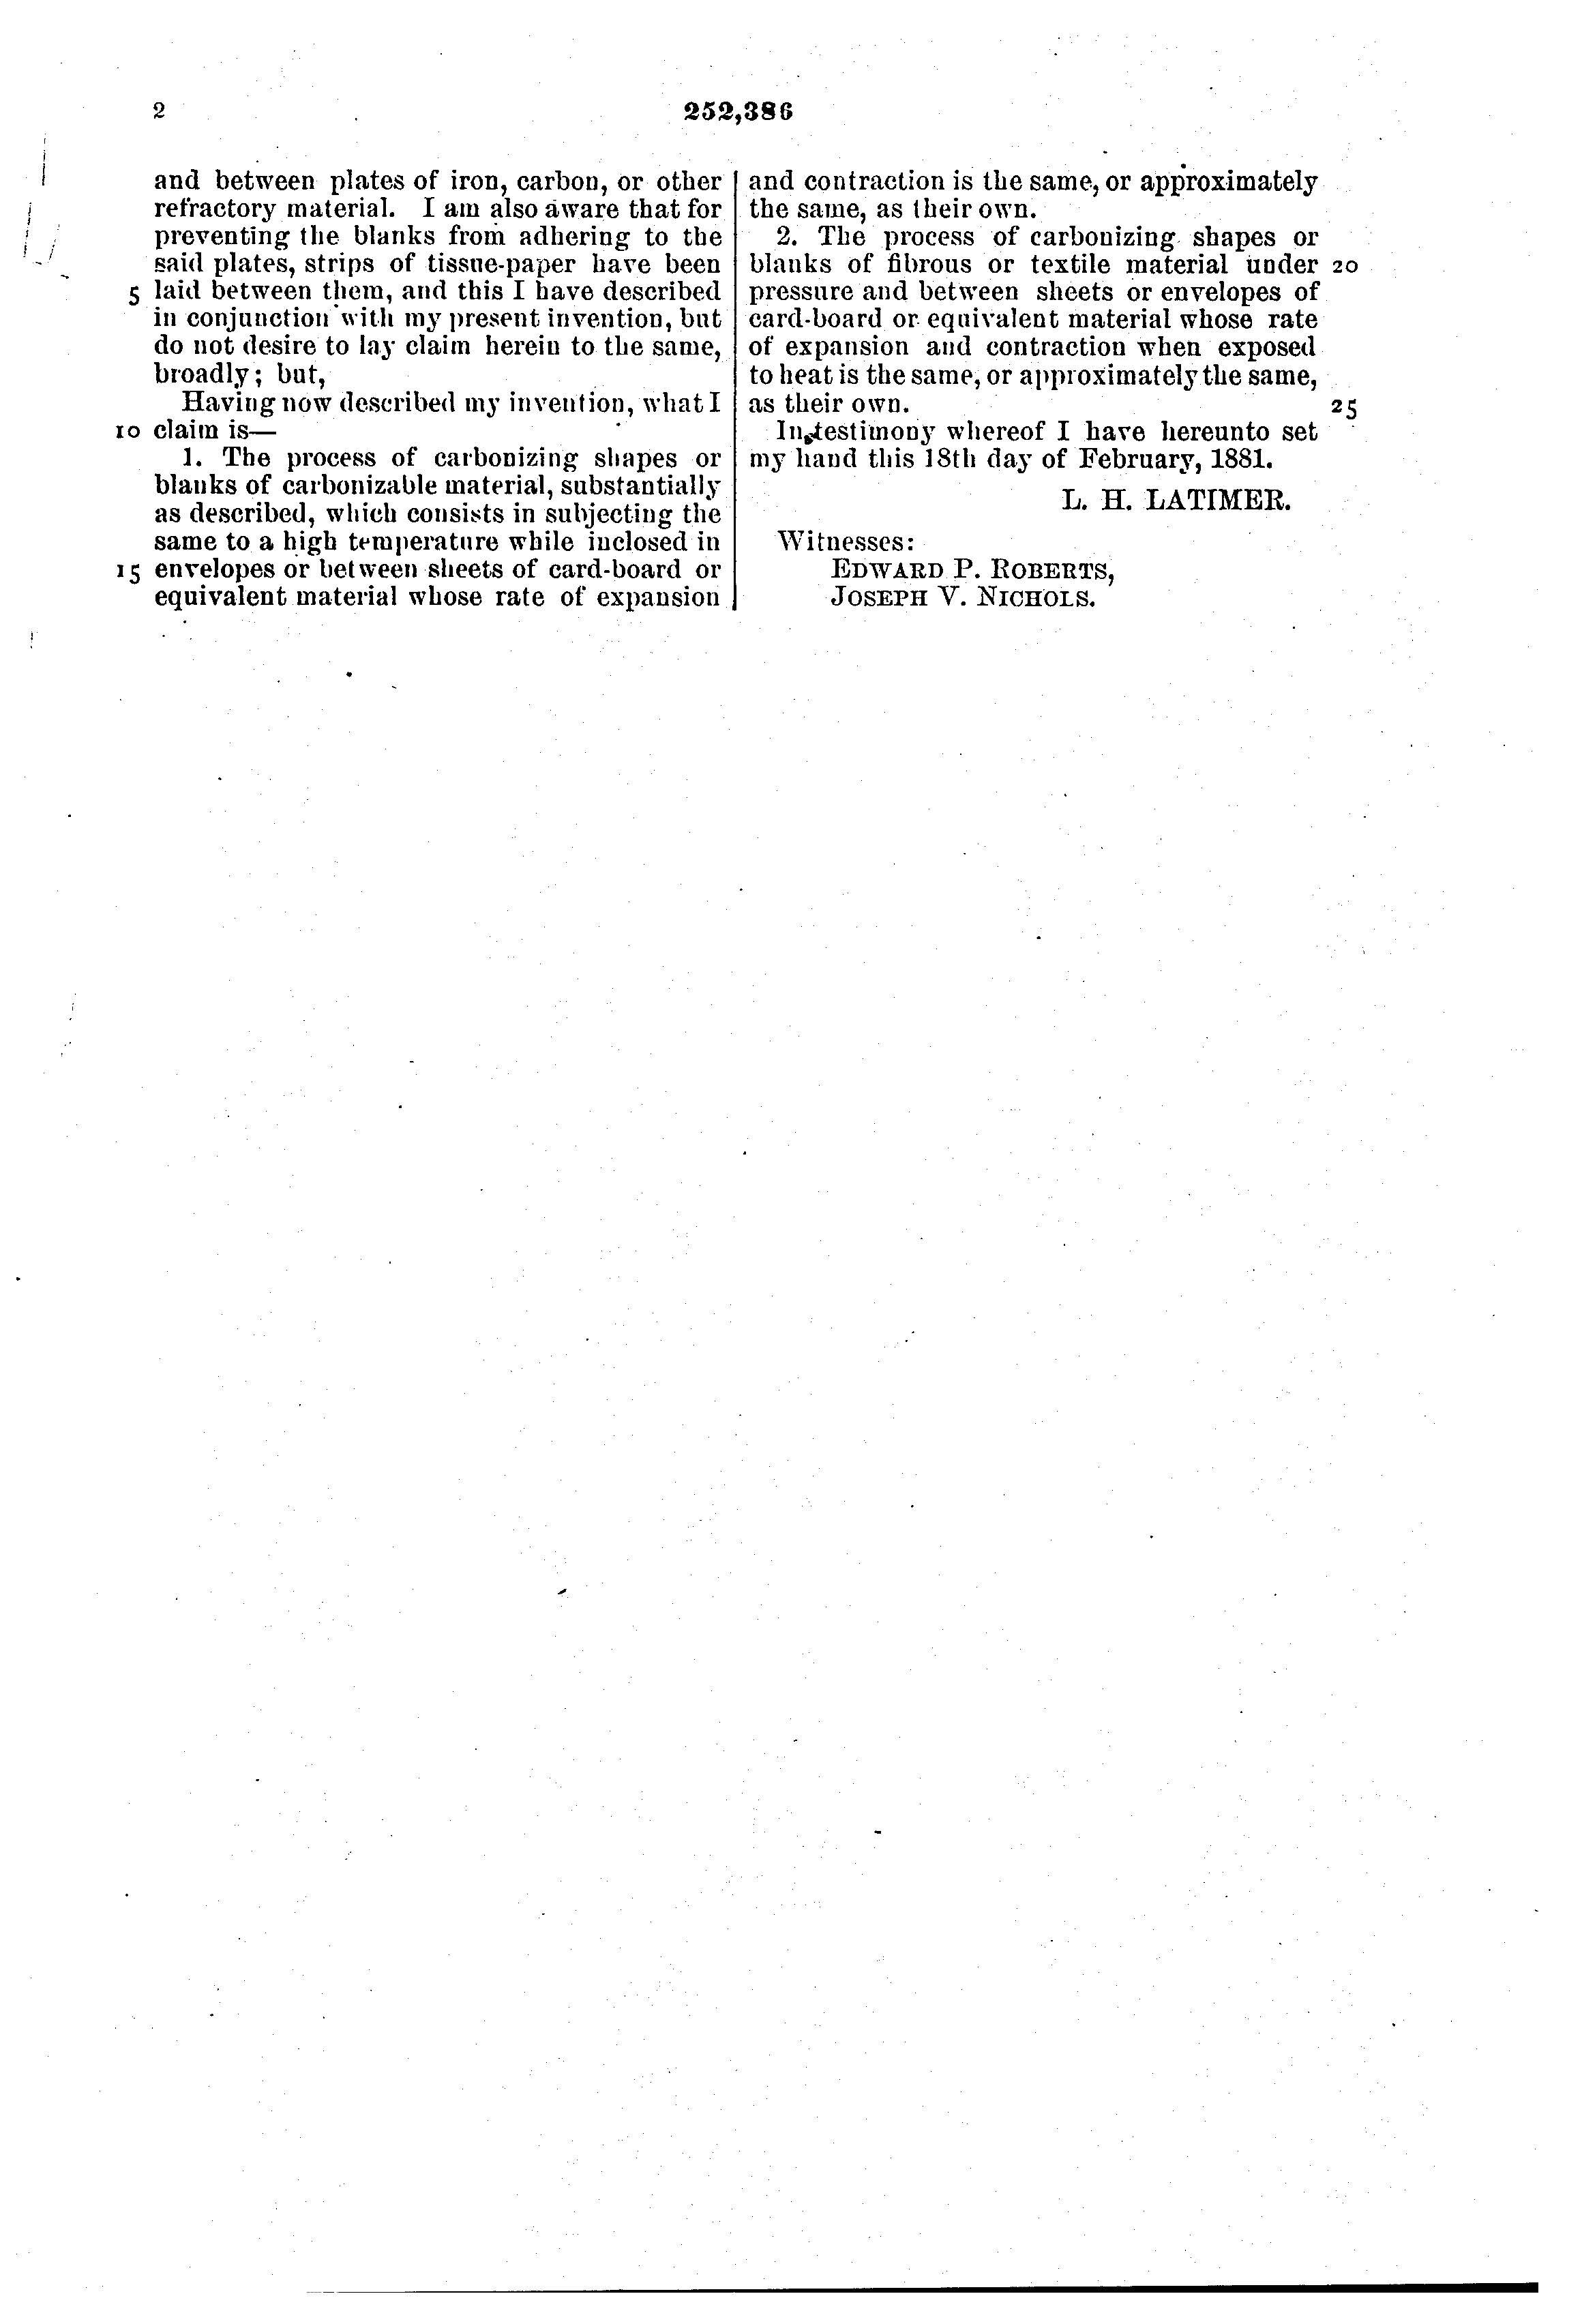 Original patent text (cont.)